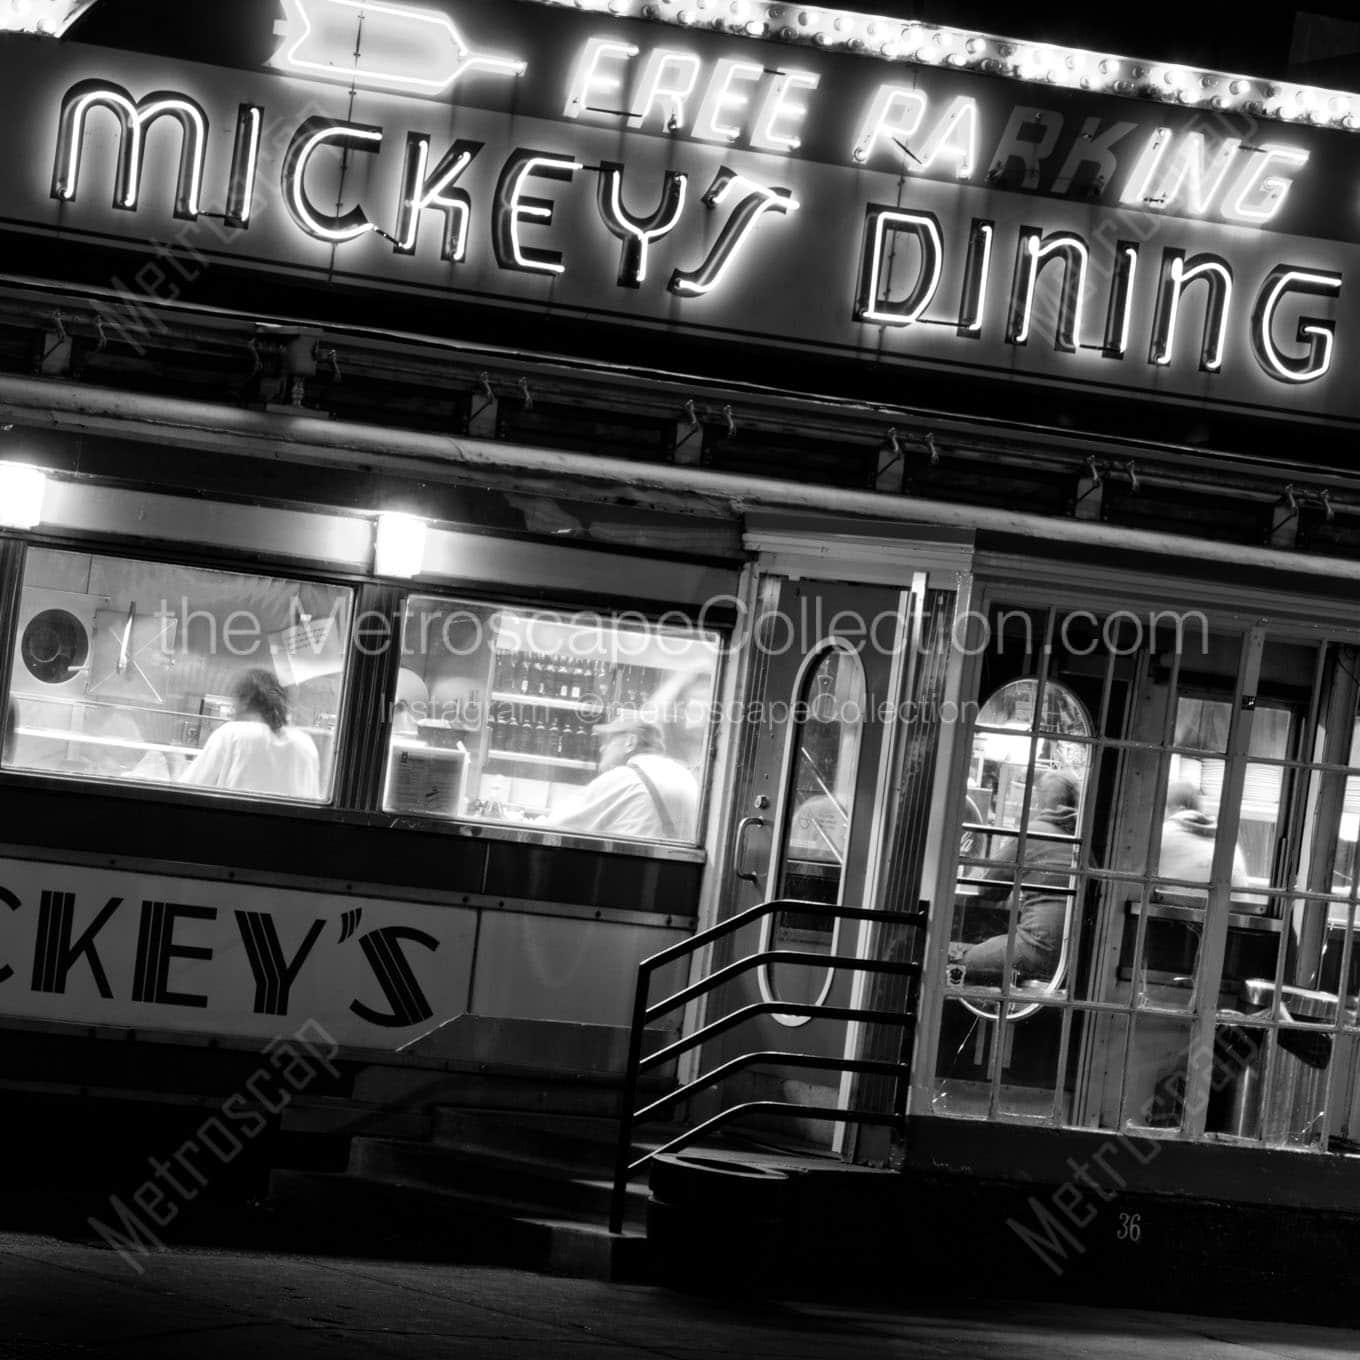 mickeys dining car at night Black & White Wall Art